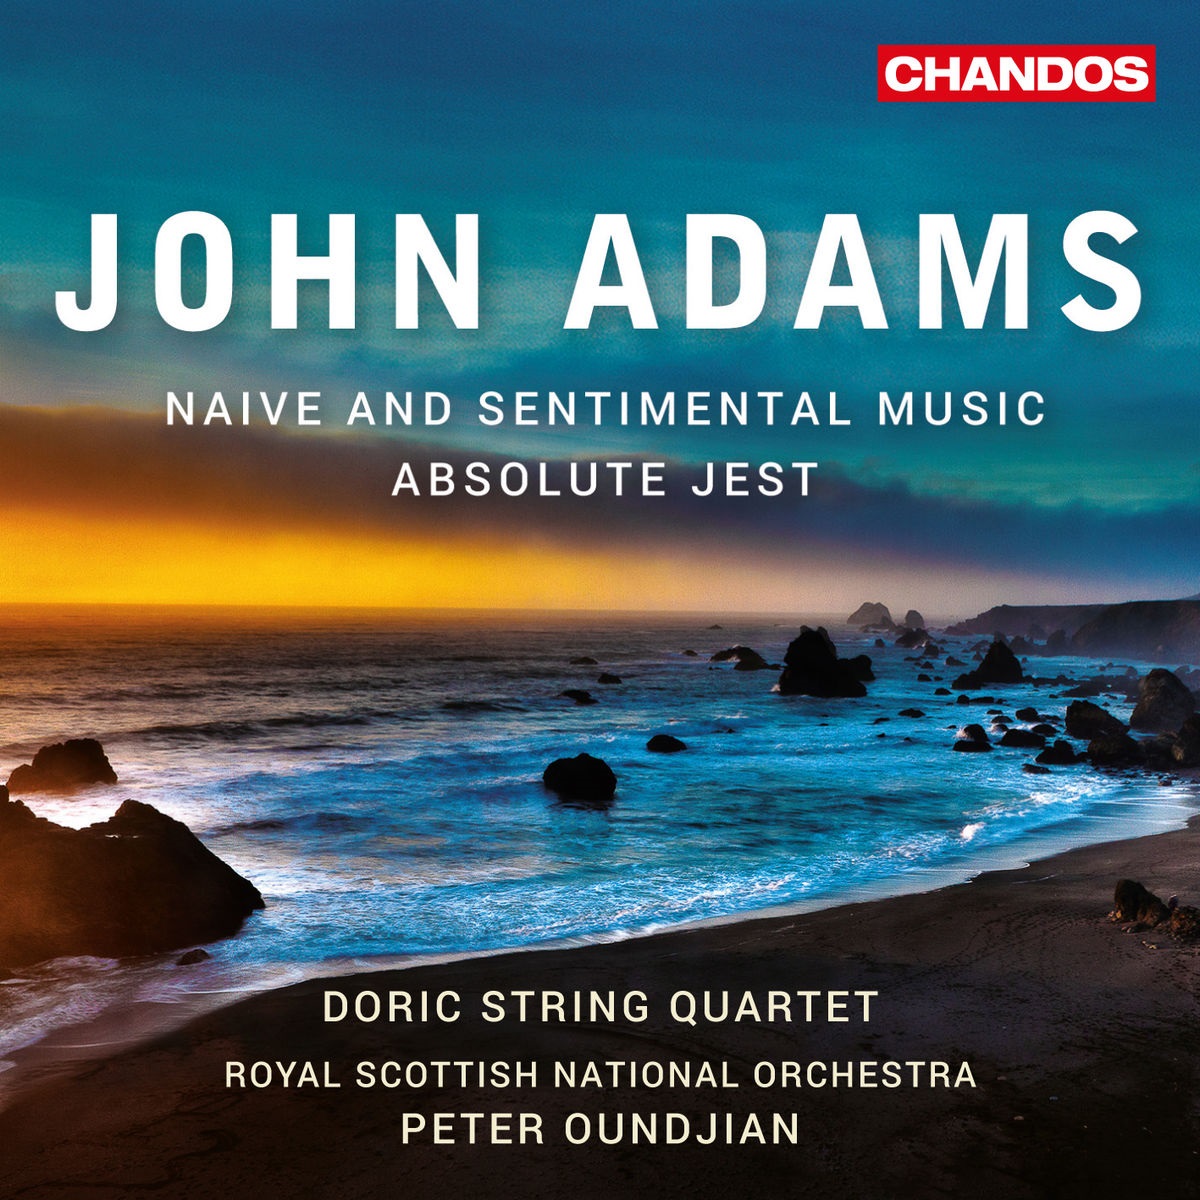 Doric String Quartet, Royal Scottish Orch., Peter Oundjian – John Adams: Naive and Sentimental Music – Absolute Jest (2018) [FLAC 24bit/96kHz]